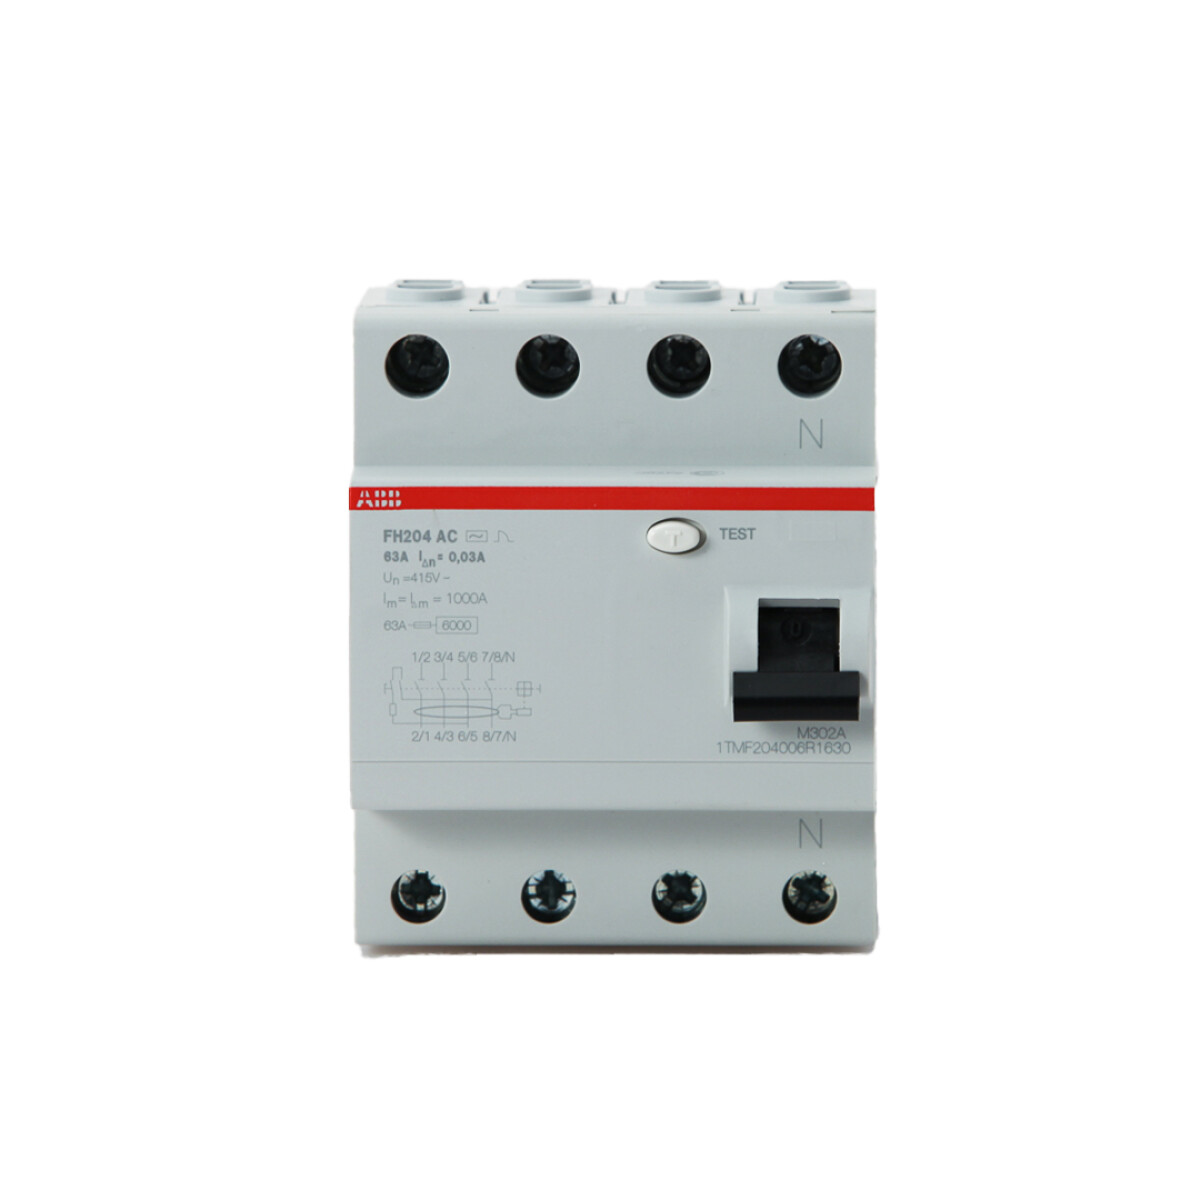 Interruptor diferencial 4P - 6kA - Linea FH200 - ABB - 40A 